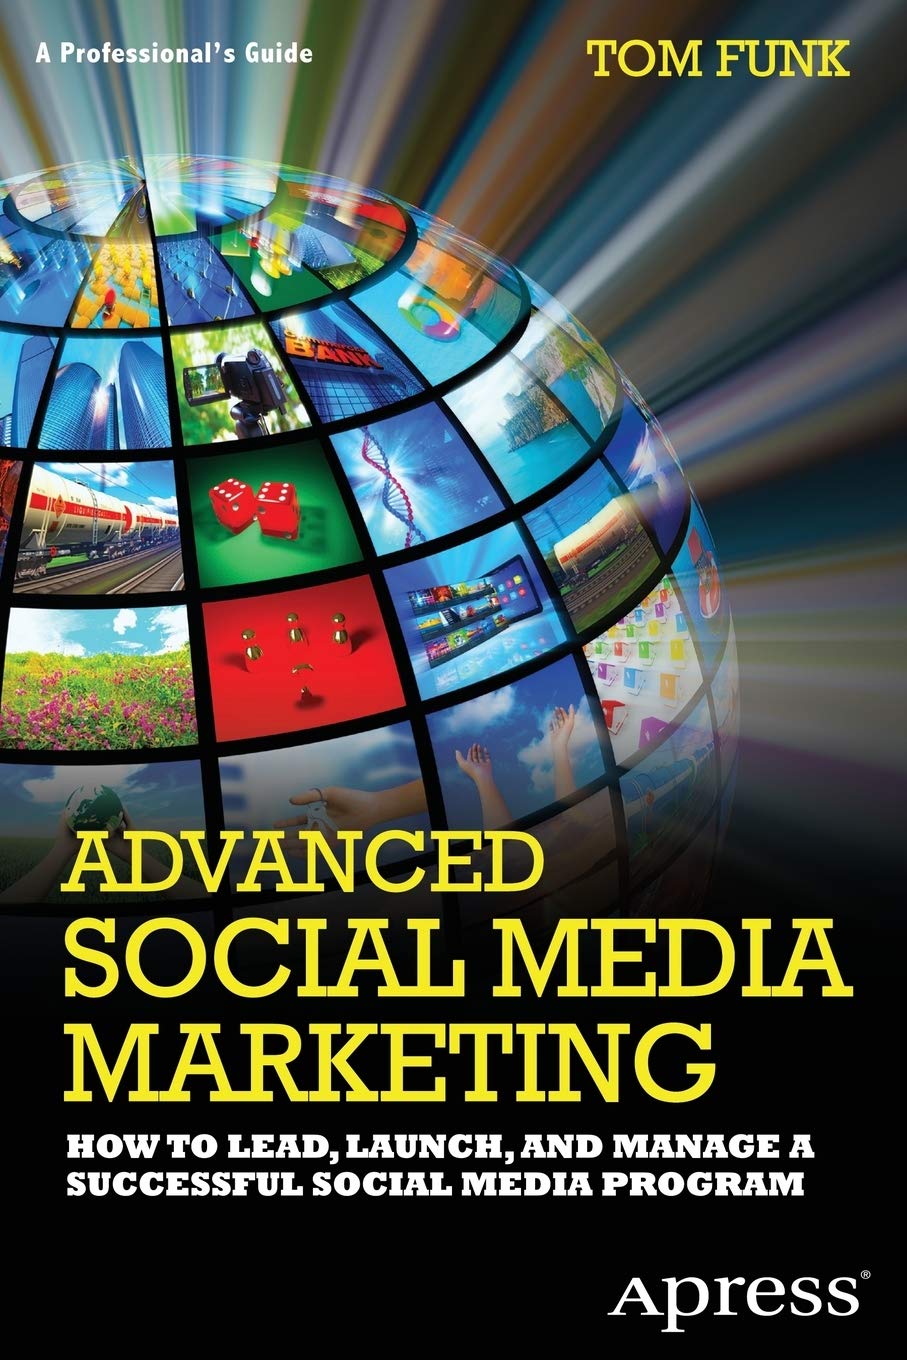 Advanced Social Media Marketing by Tom Funk